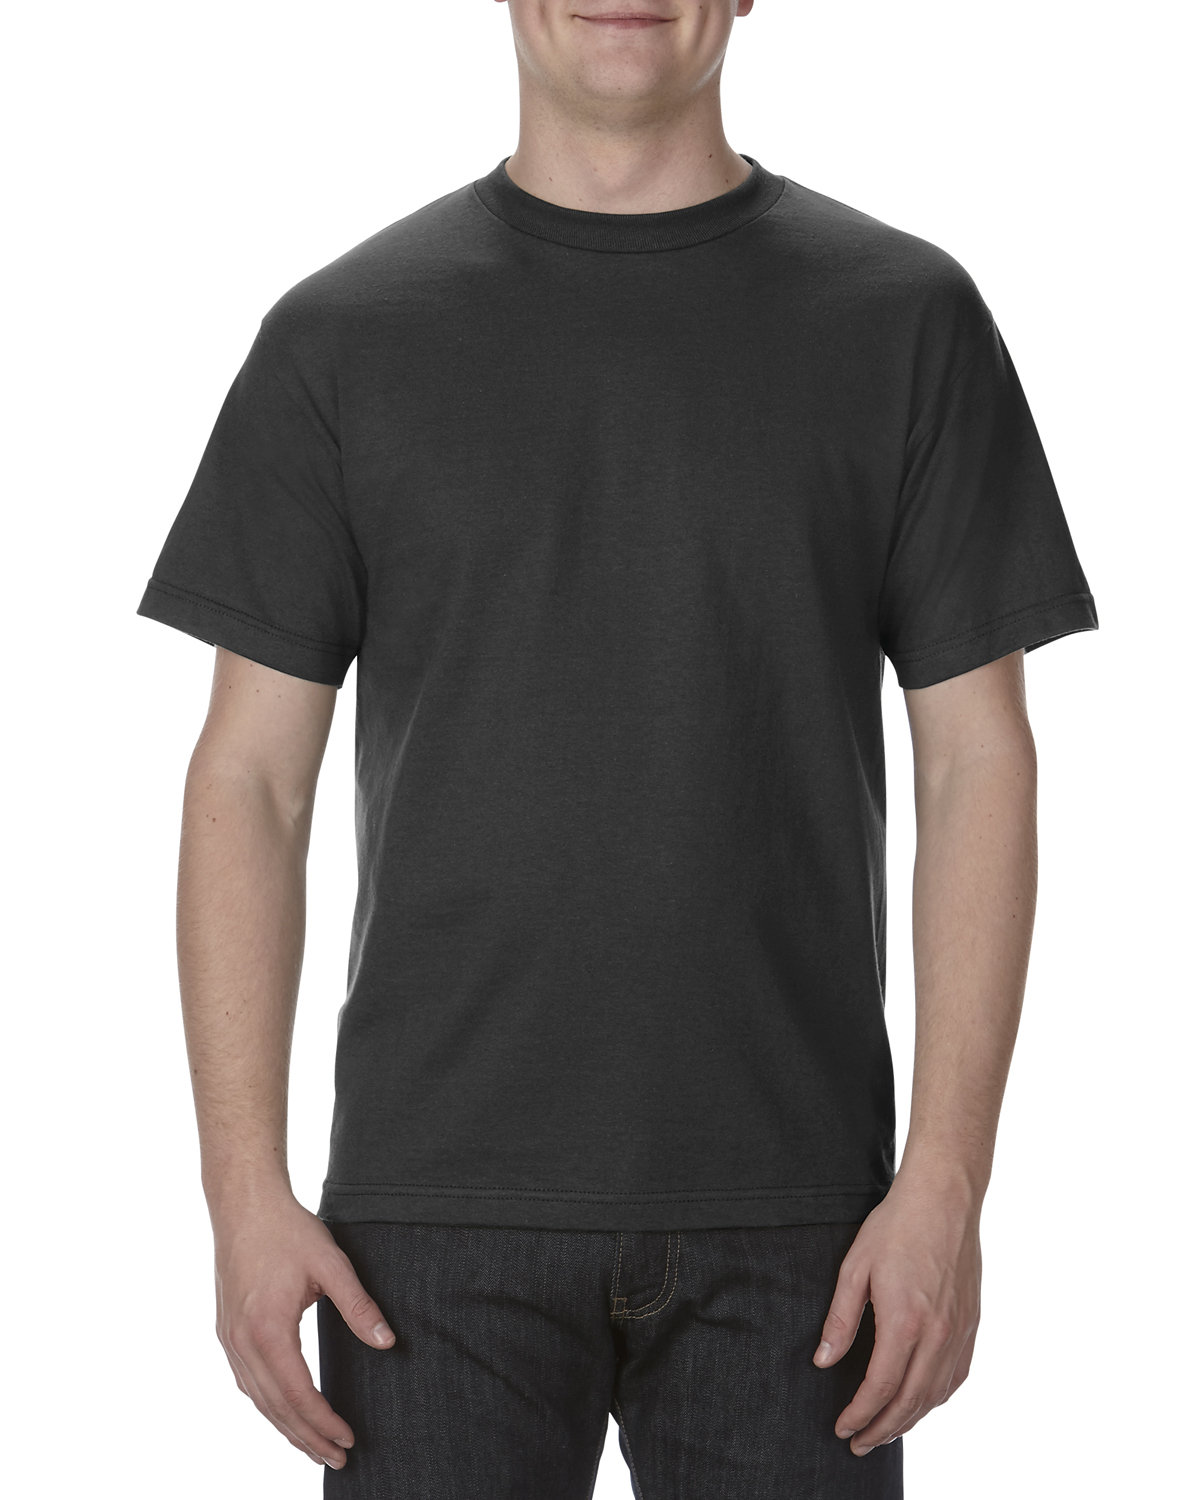 American Apparel Adult 6.0 oz., 100% Cotton T-Shirt TAR 